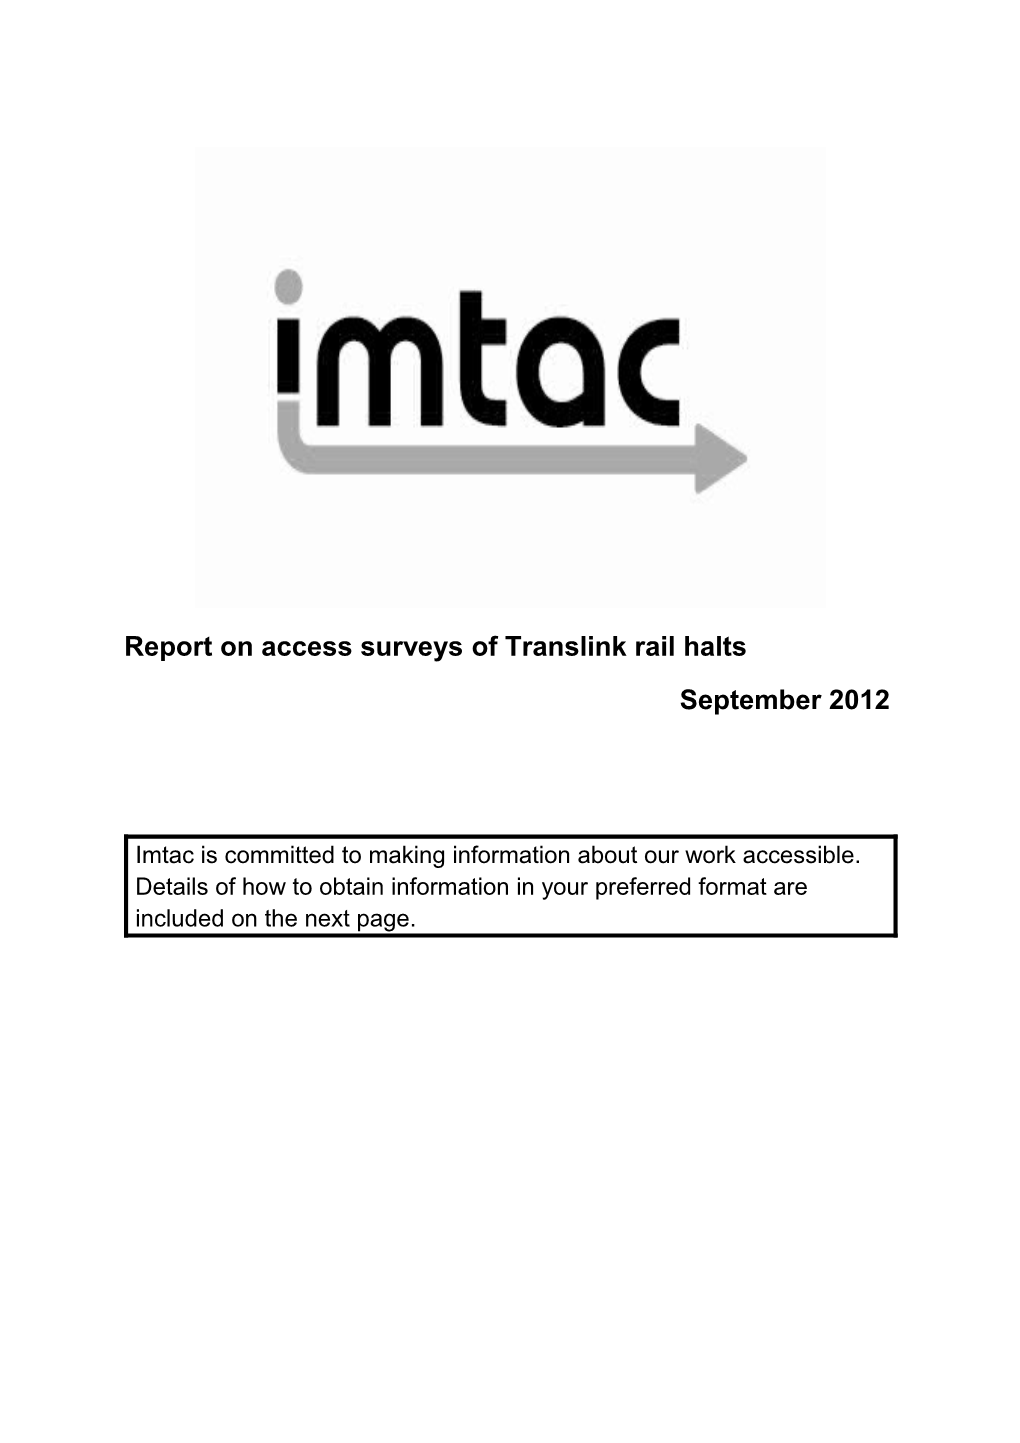 Report on Access Surveys of Translink Rail Halts